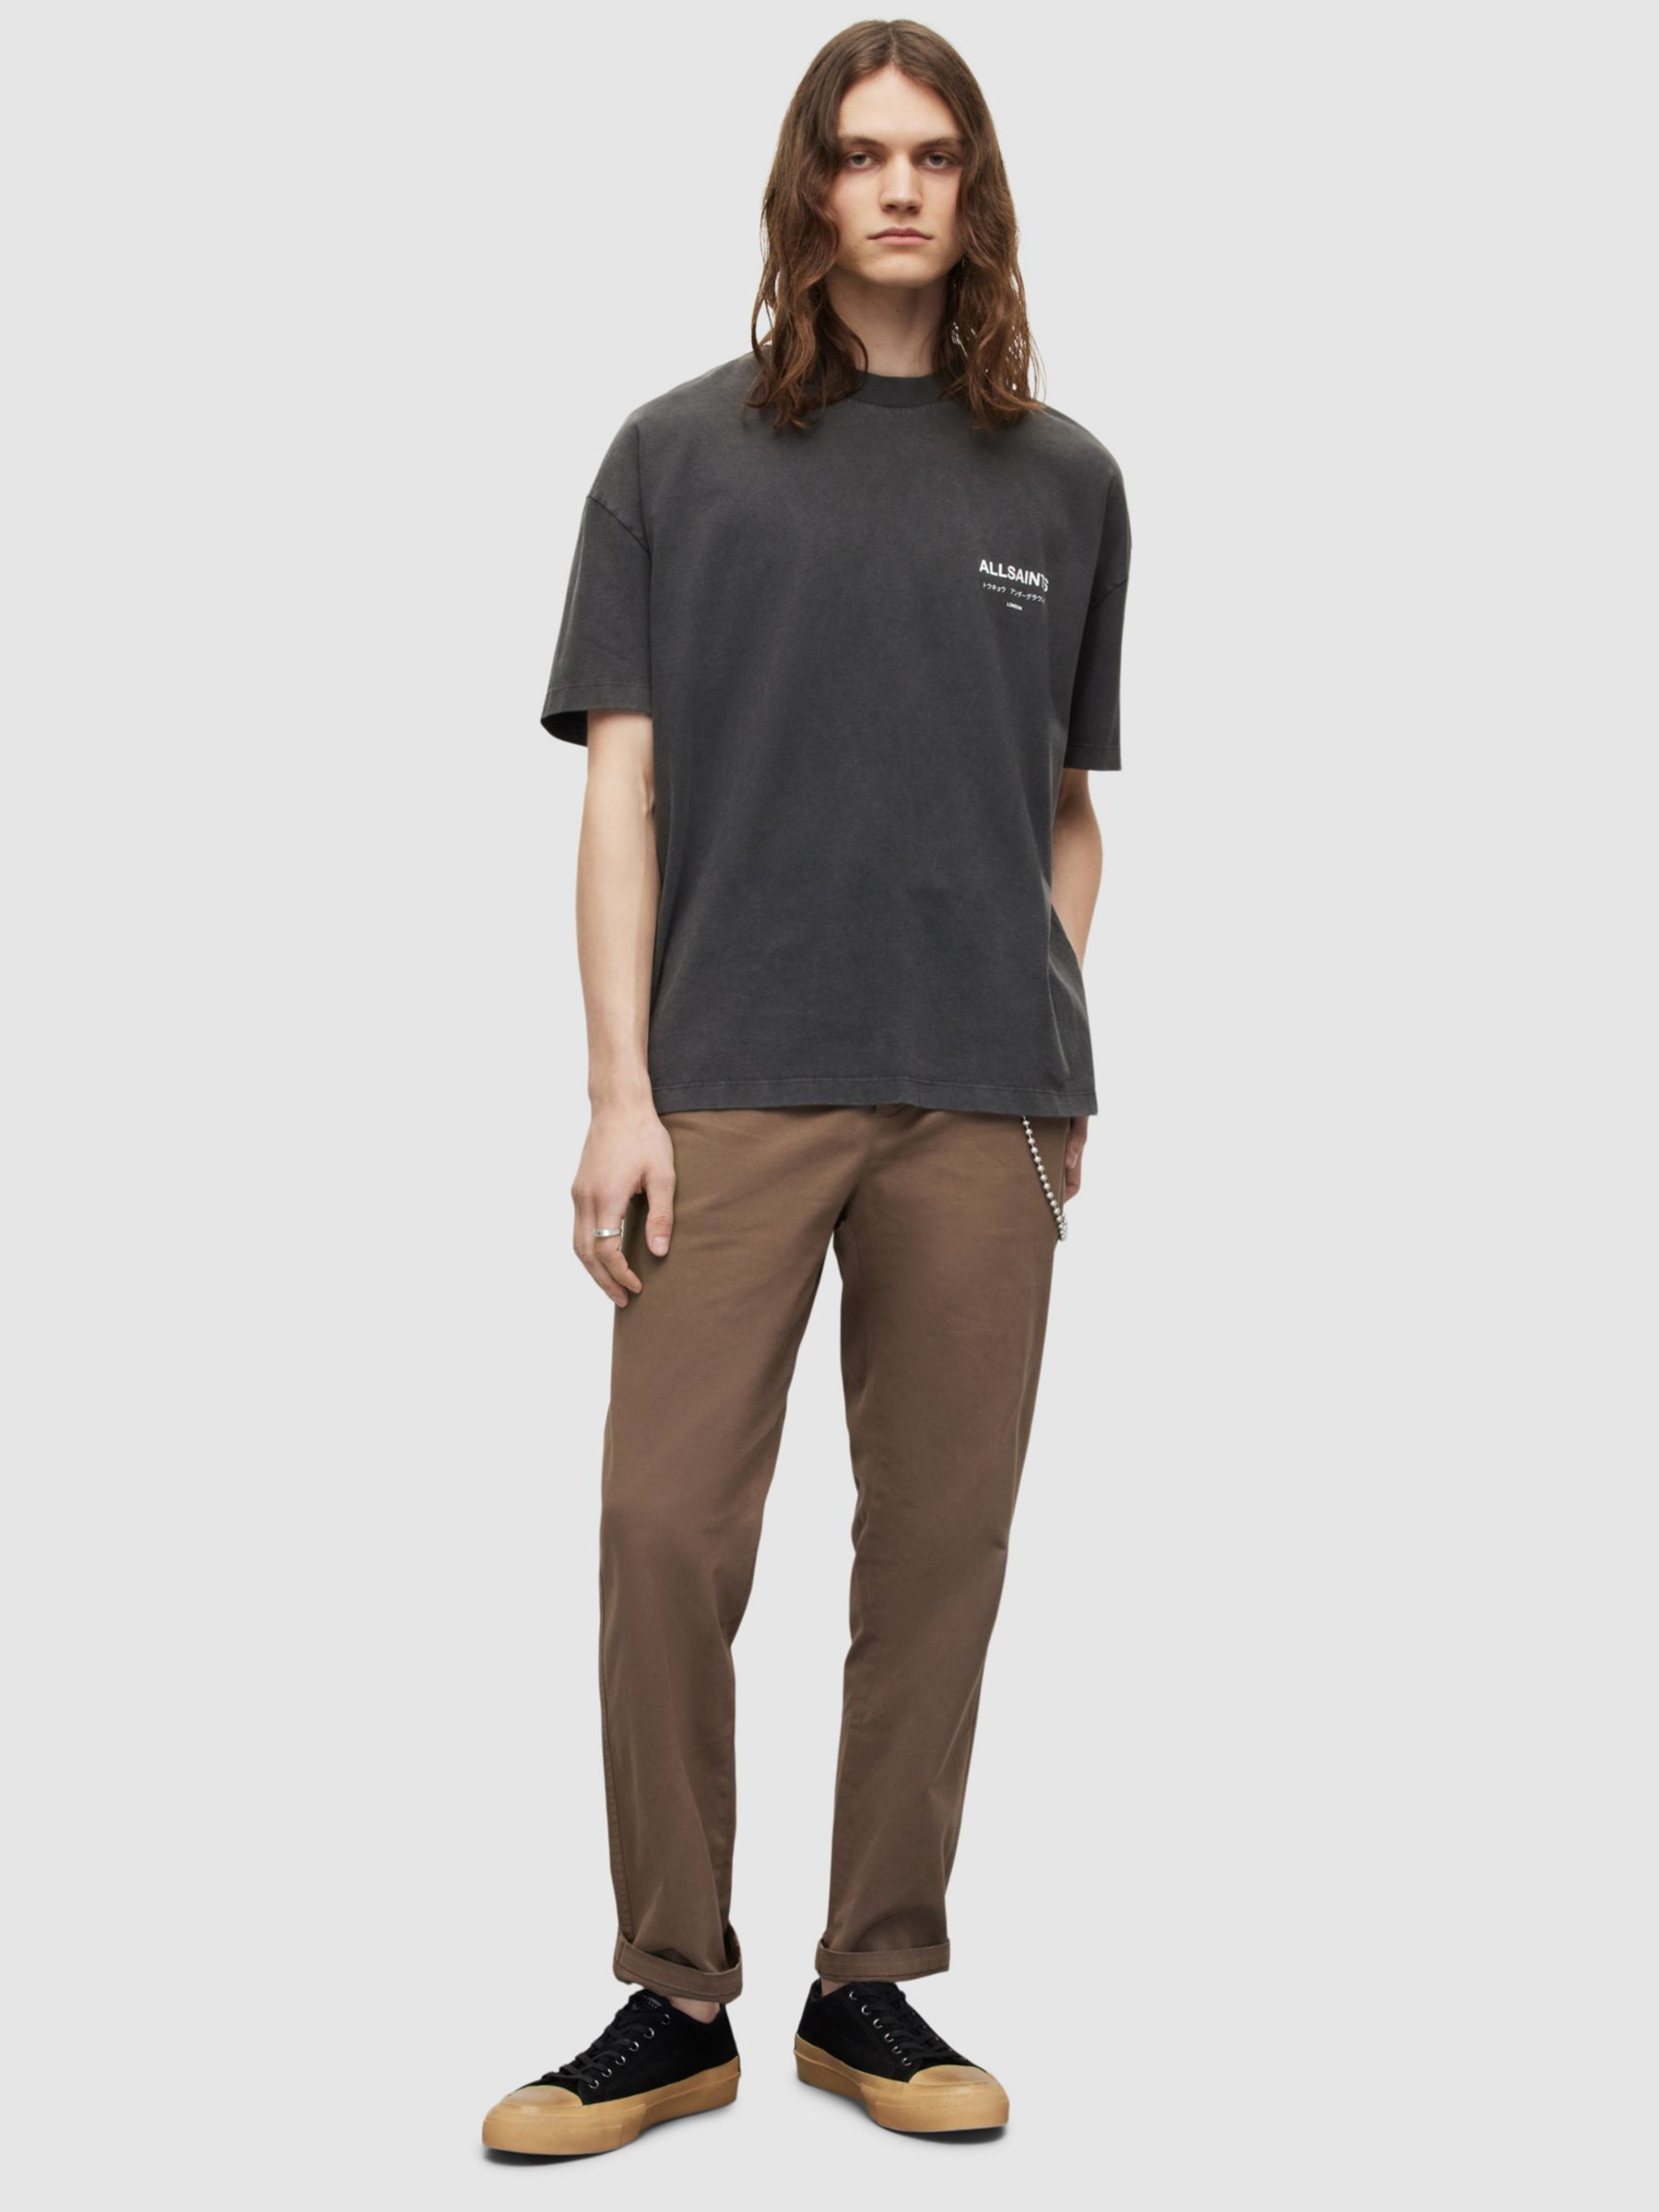 AllSaints Underground T-Shirt, Washed Black at John Lewis & Partners